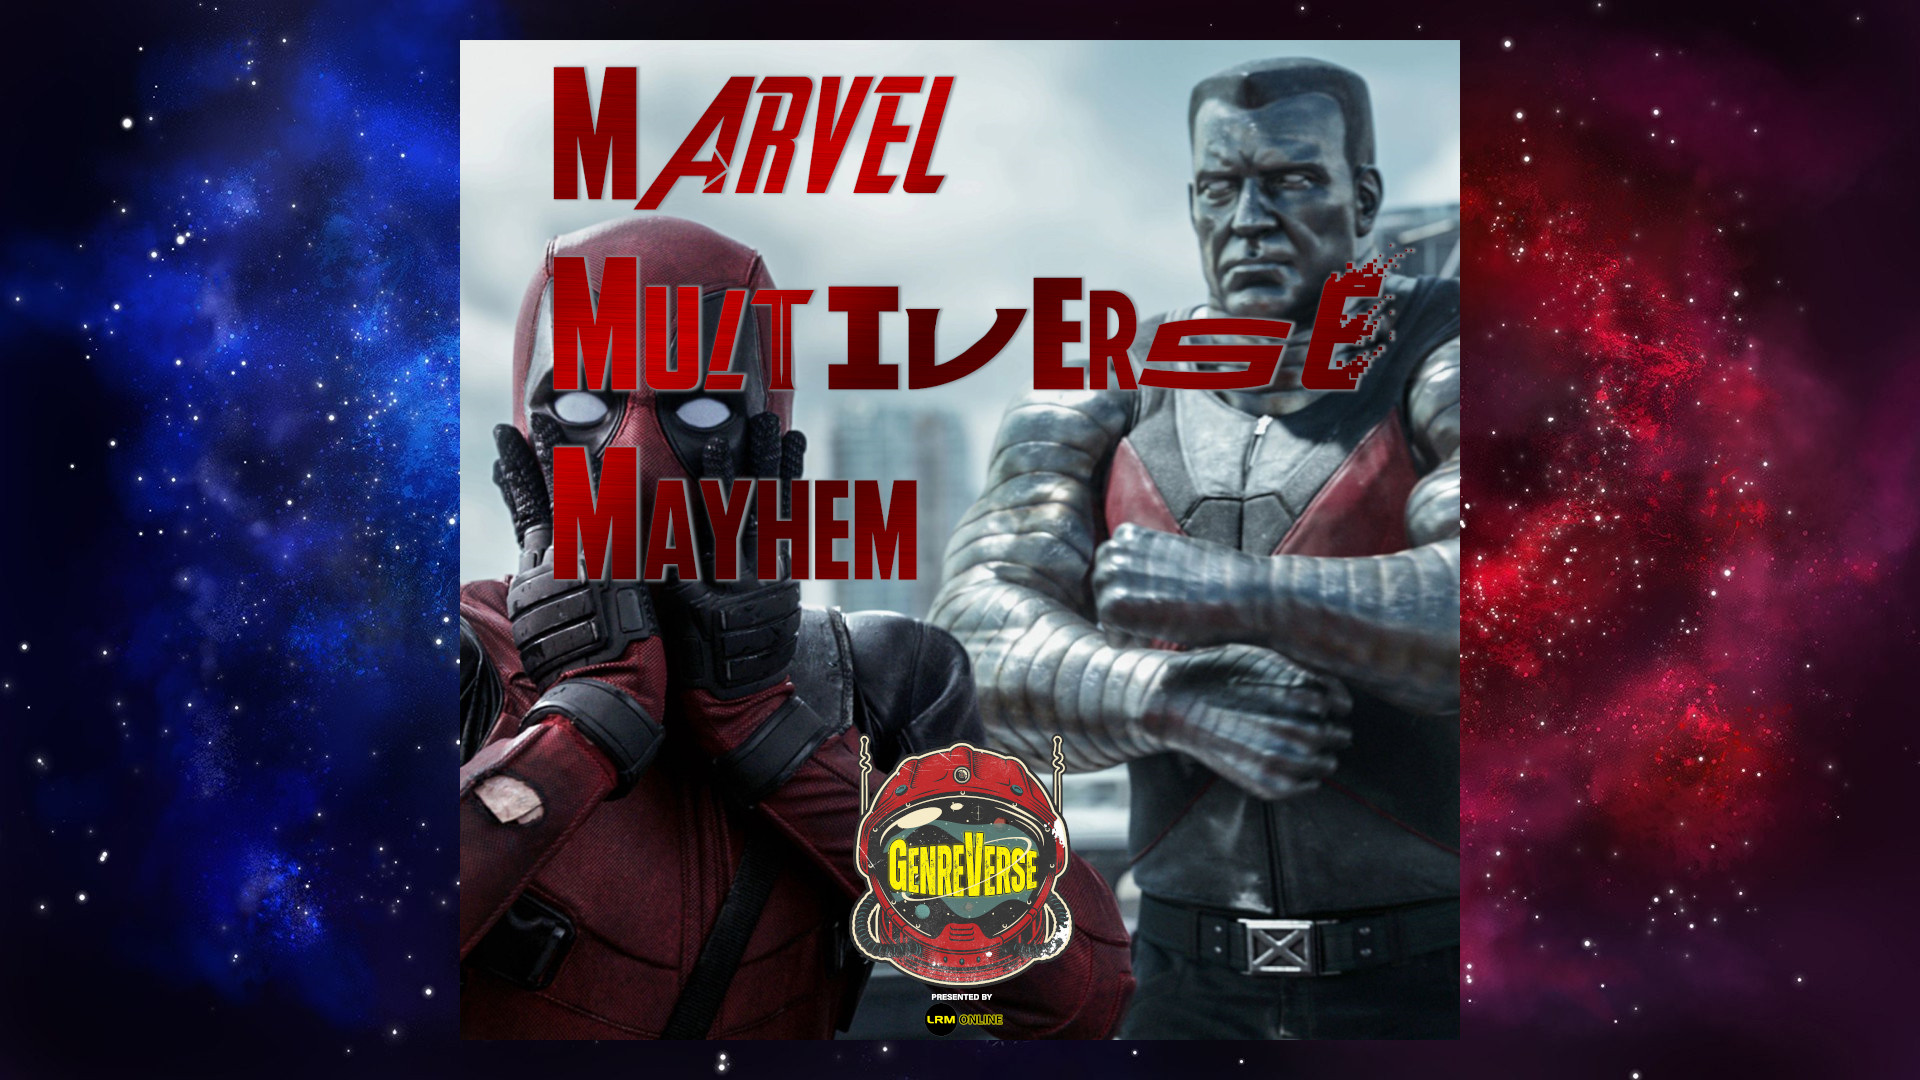 Deadpool Review Best FFoX-Men Movie Ever Marvel Multiverse Mayhem